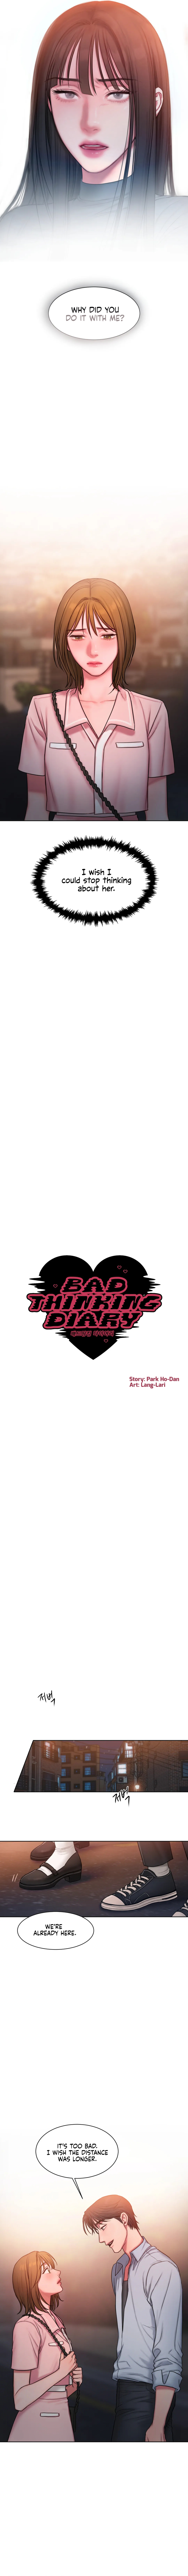 Bad Thinking Diary image